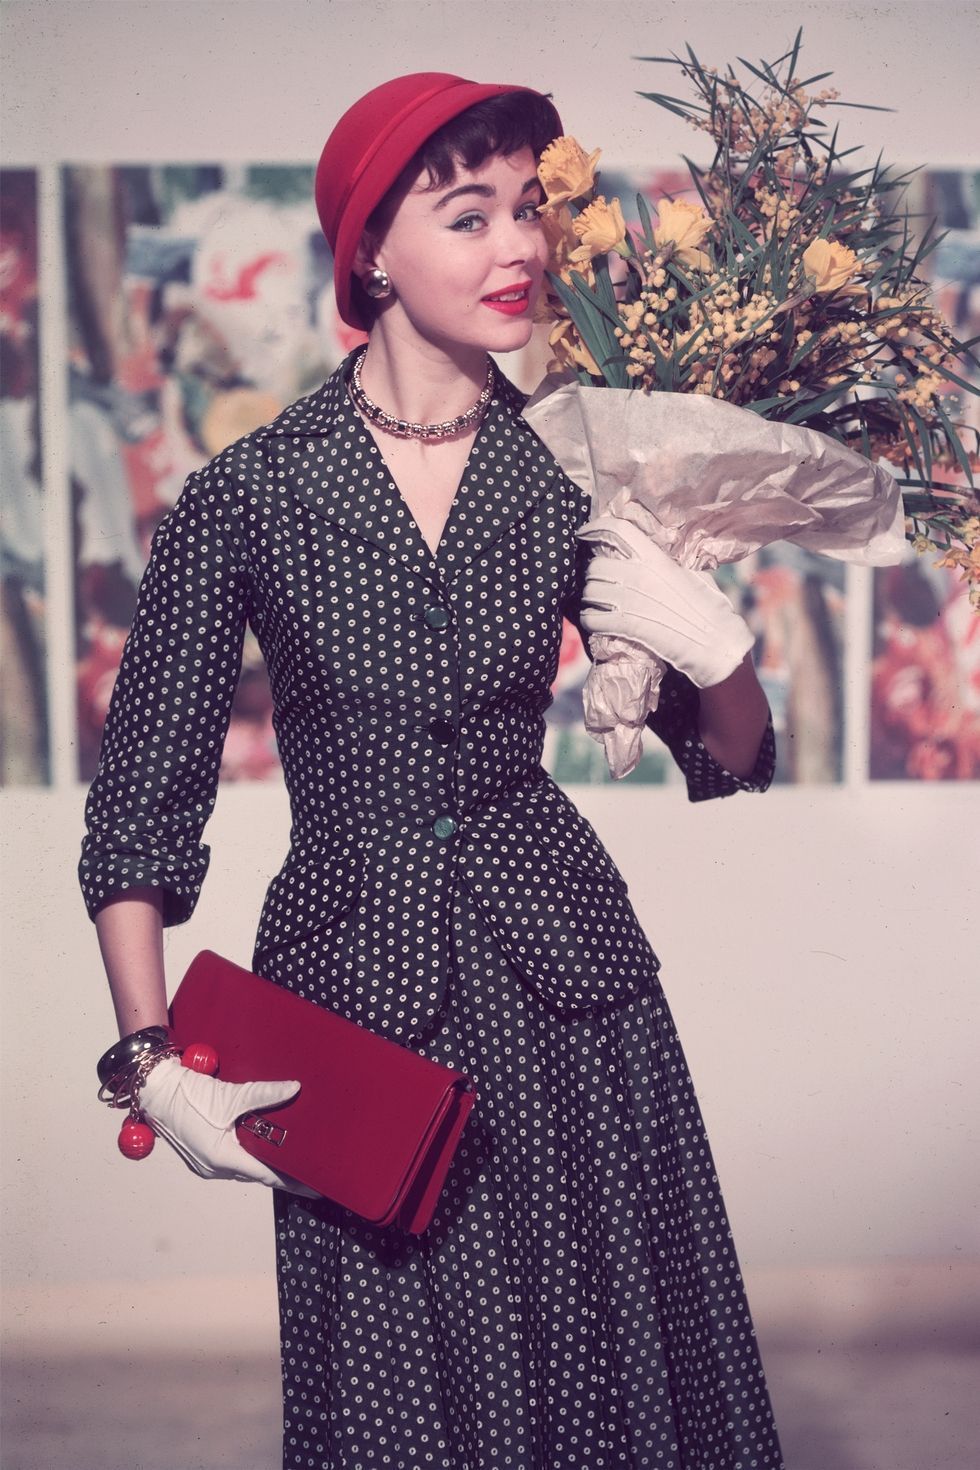 1950s women fashion